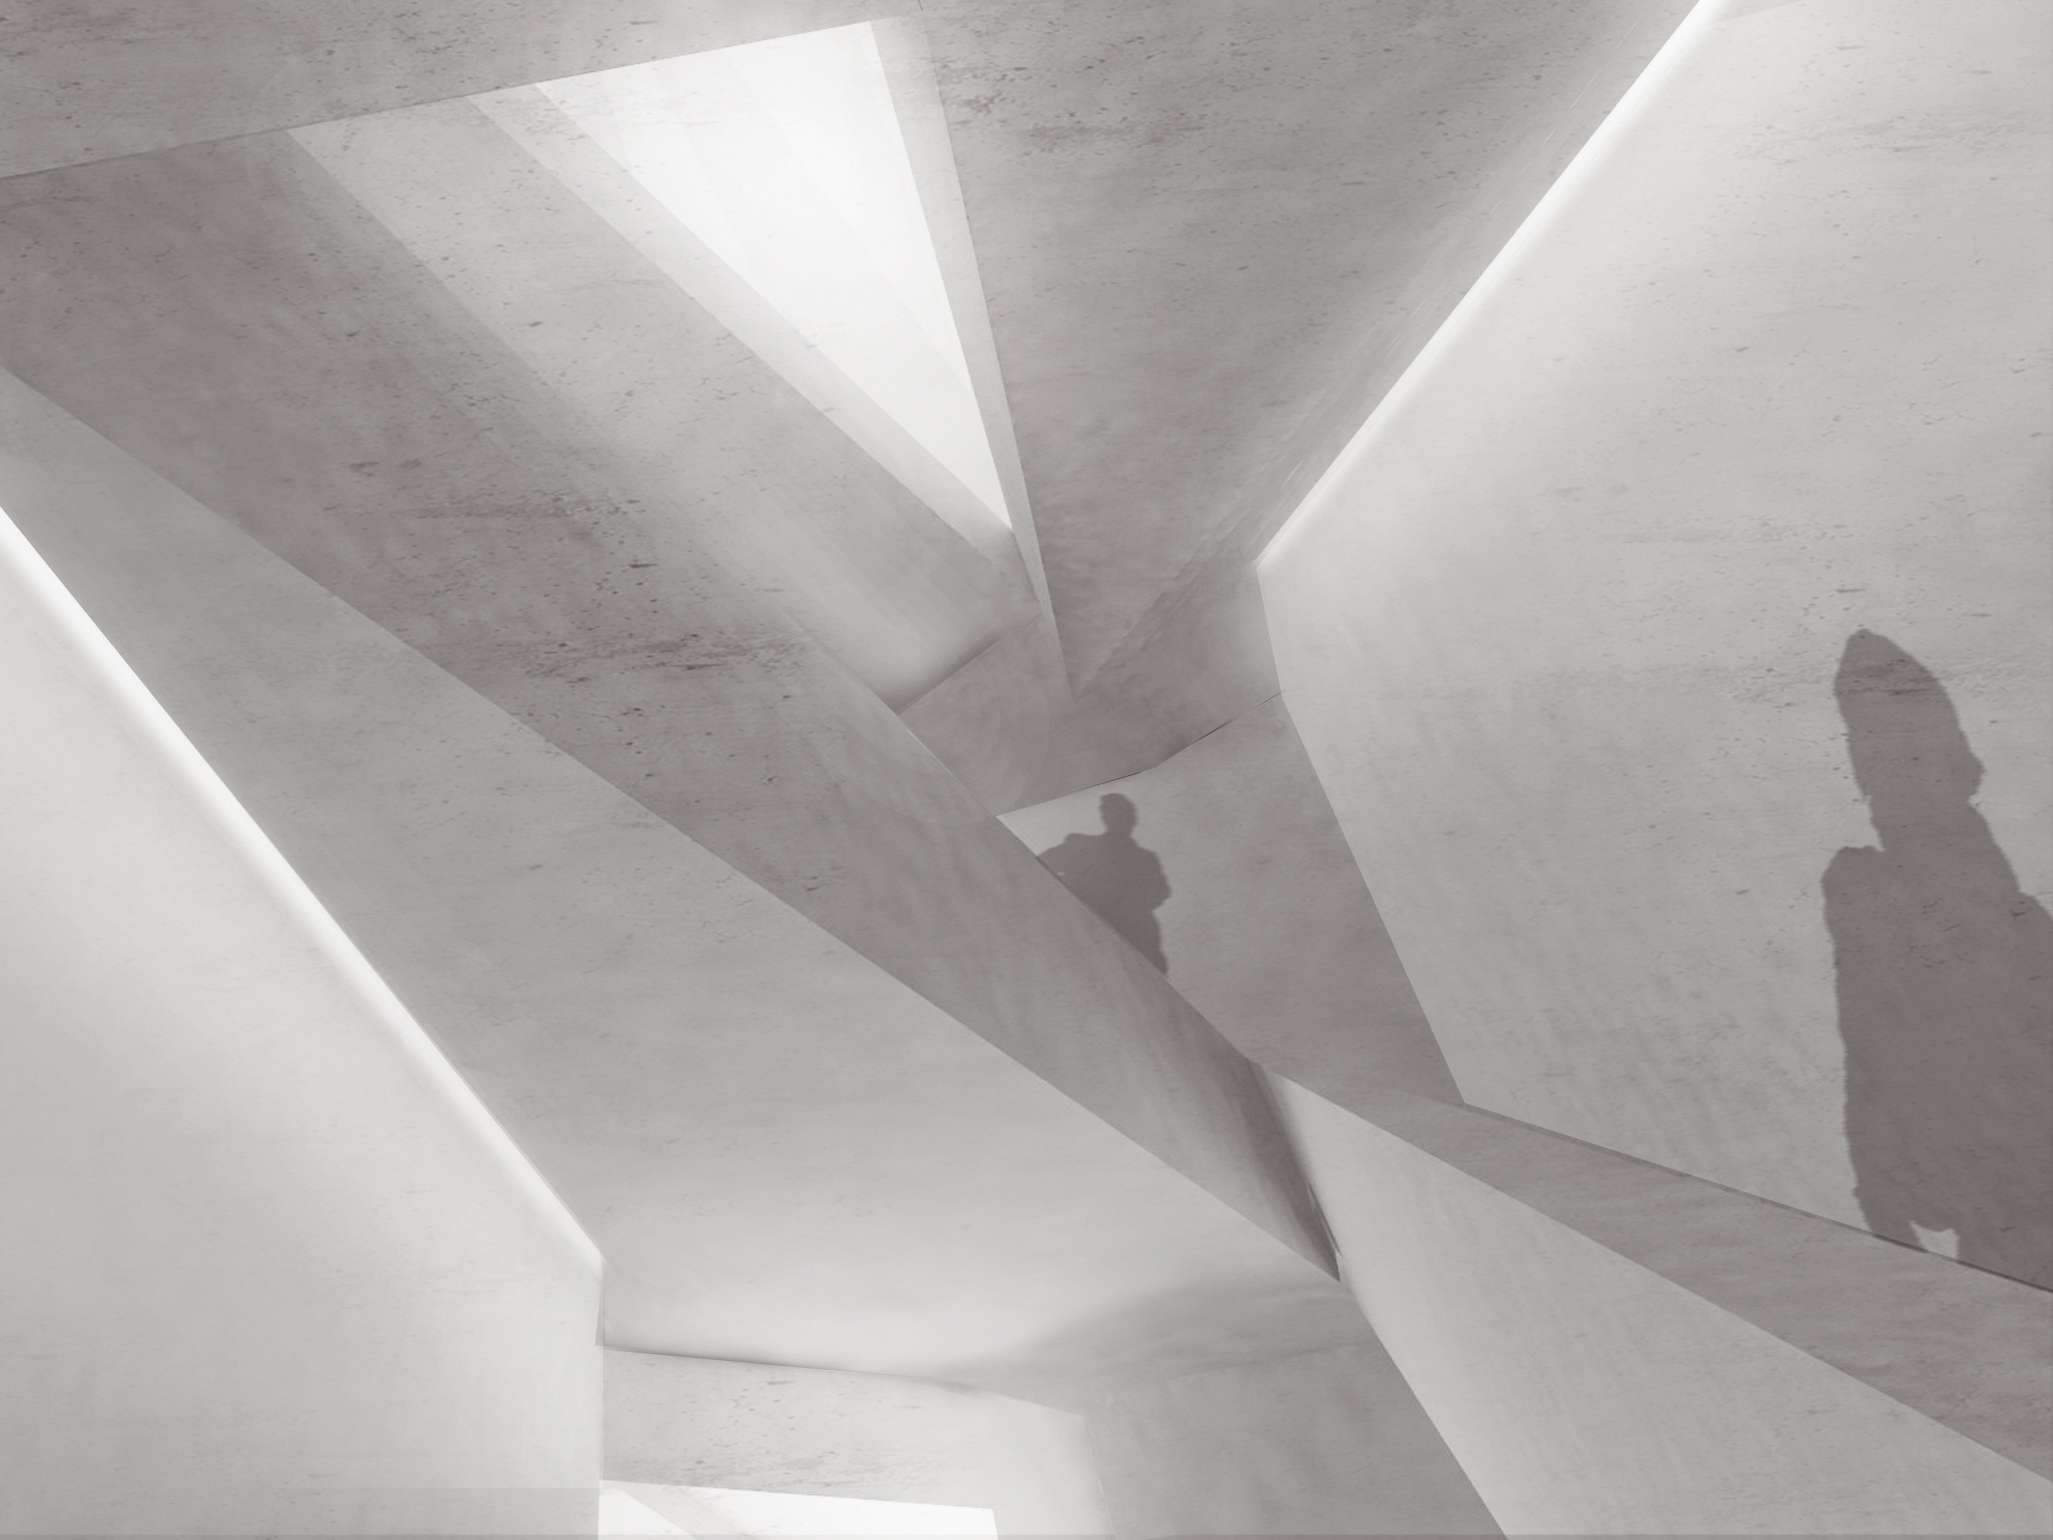 Michael-Becker-Architects-Architekten-Gipfelstation-Nebelhorn-Perspektive-K04